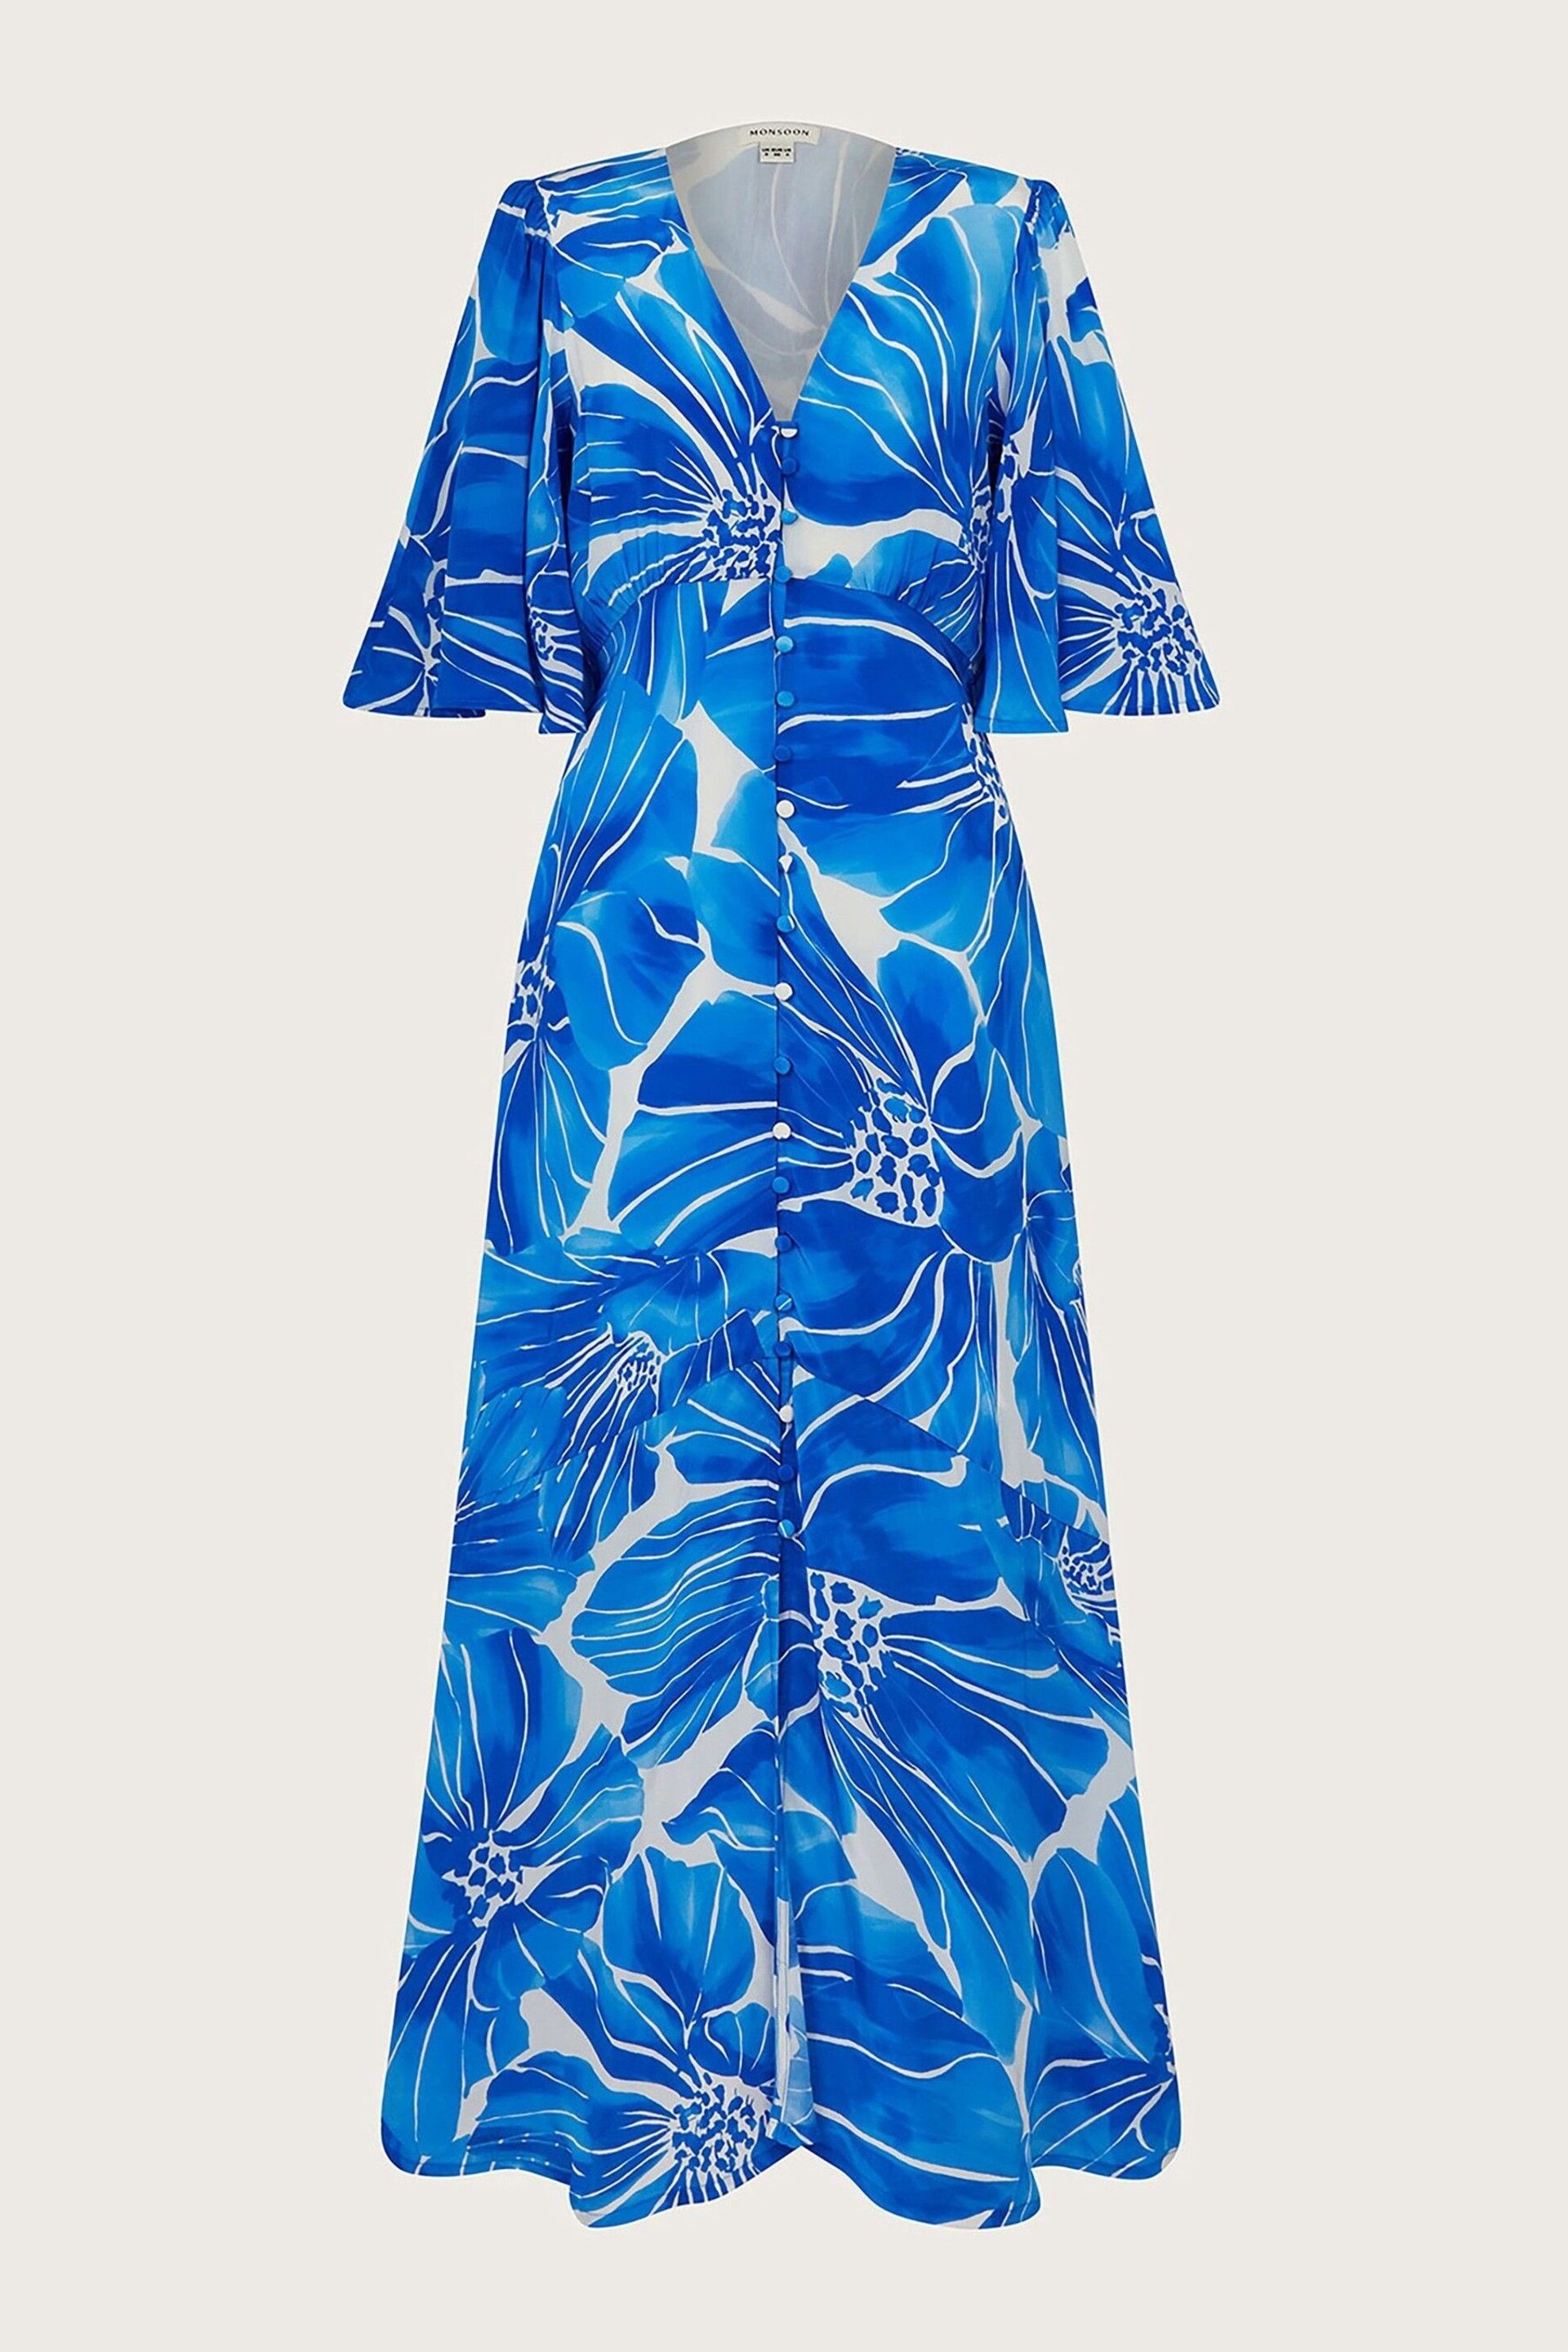 Monsoon Blue Maura Floral Tea Dress - Image 5 of 5